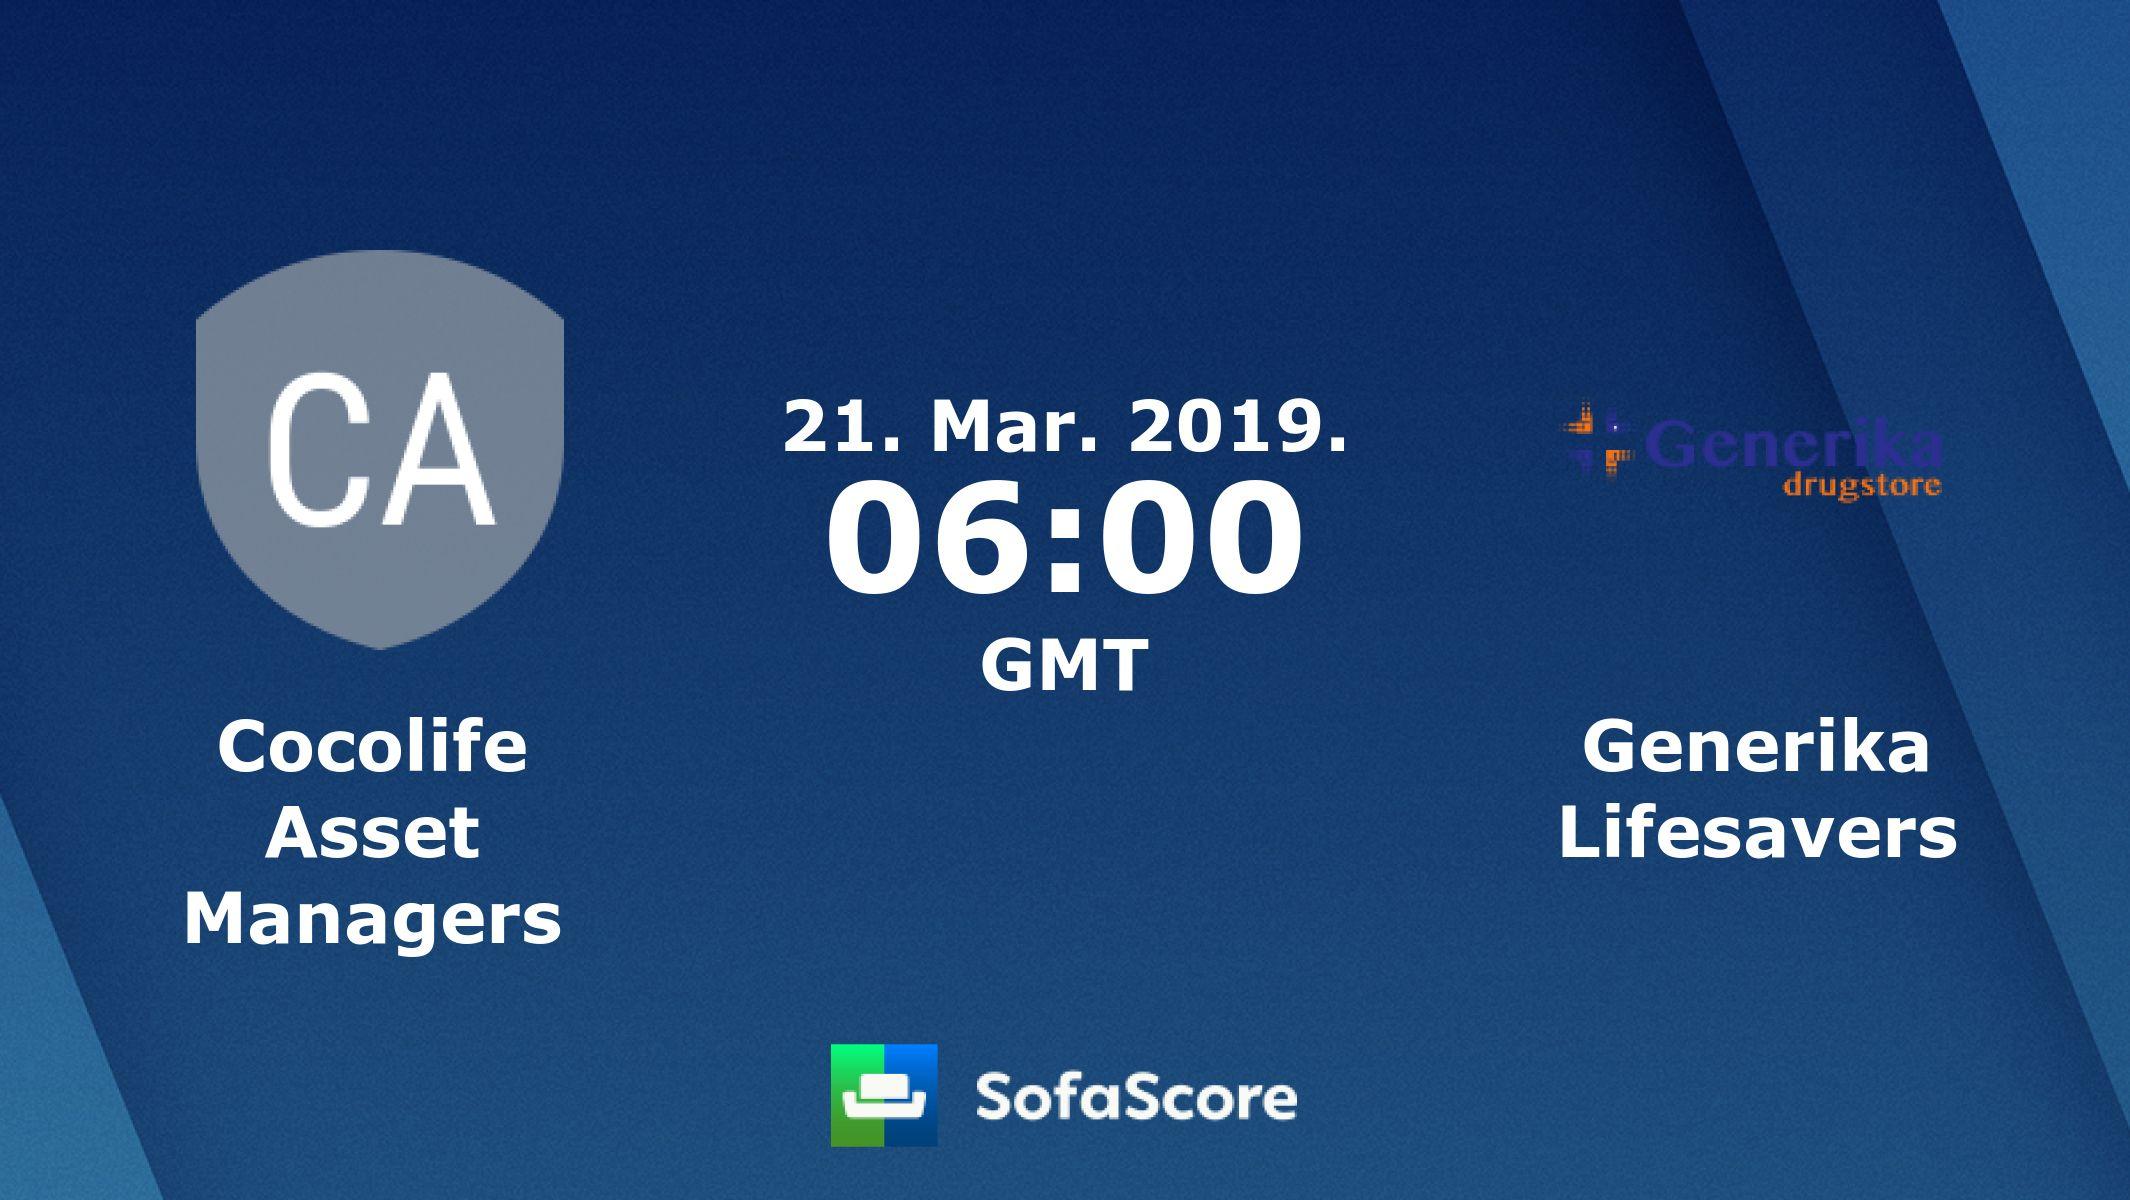 Cocolife Logo - Cocolife Asset Managers Generika Lifesavers live score, video stream